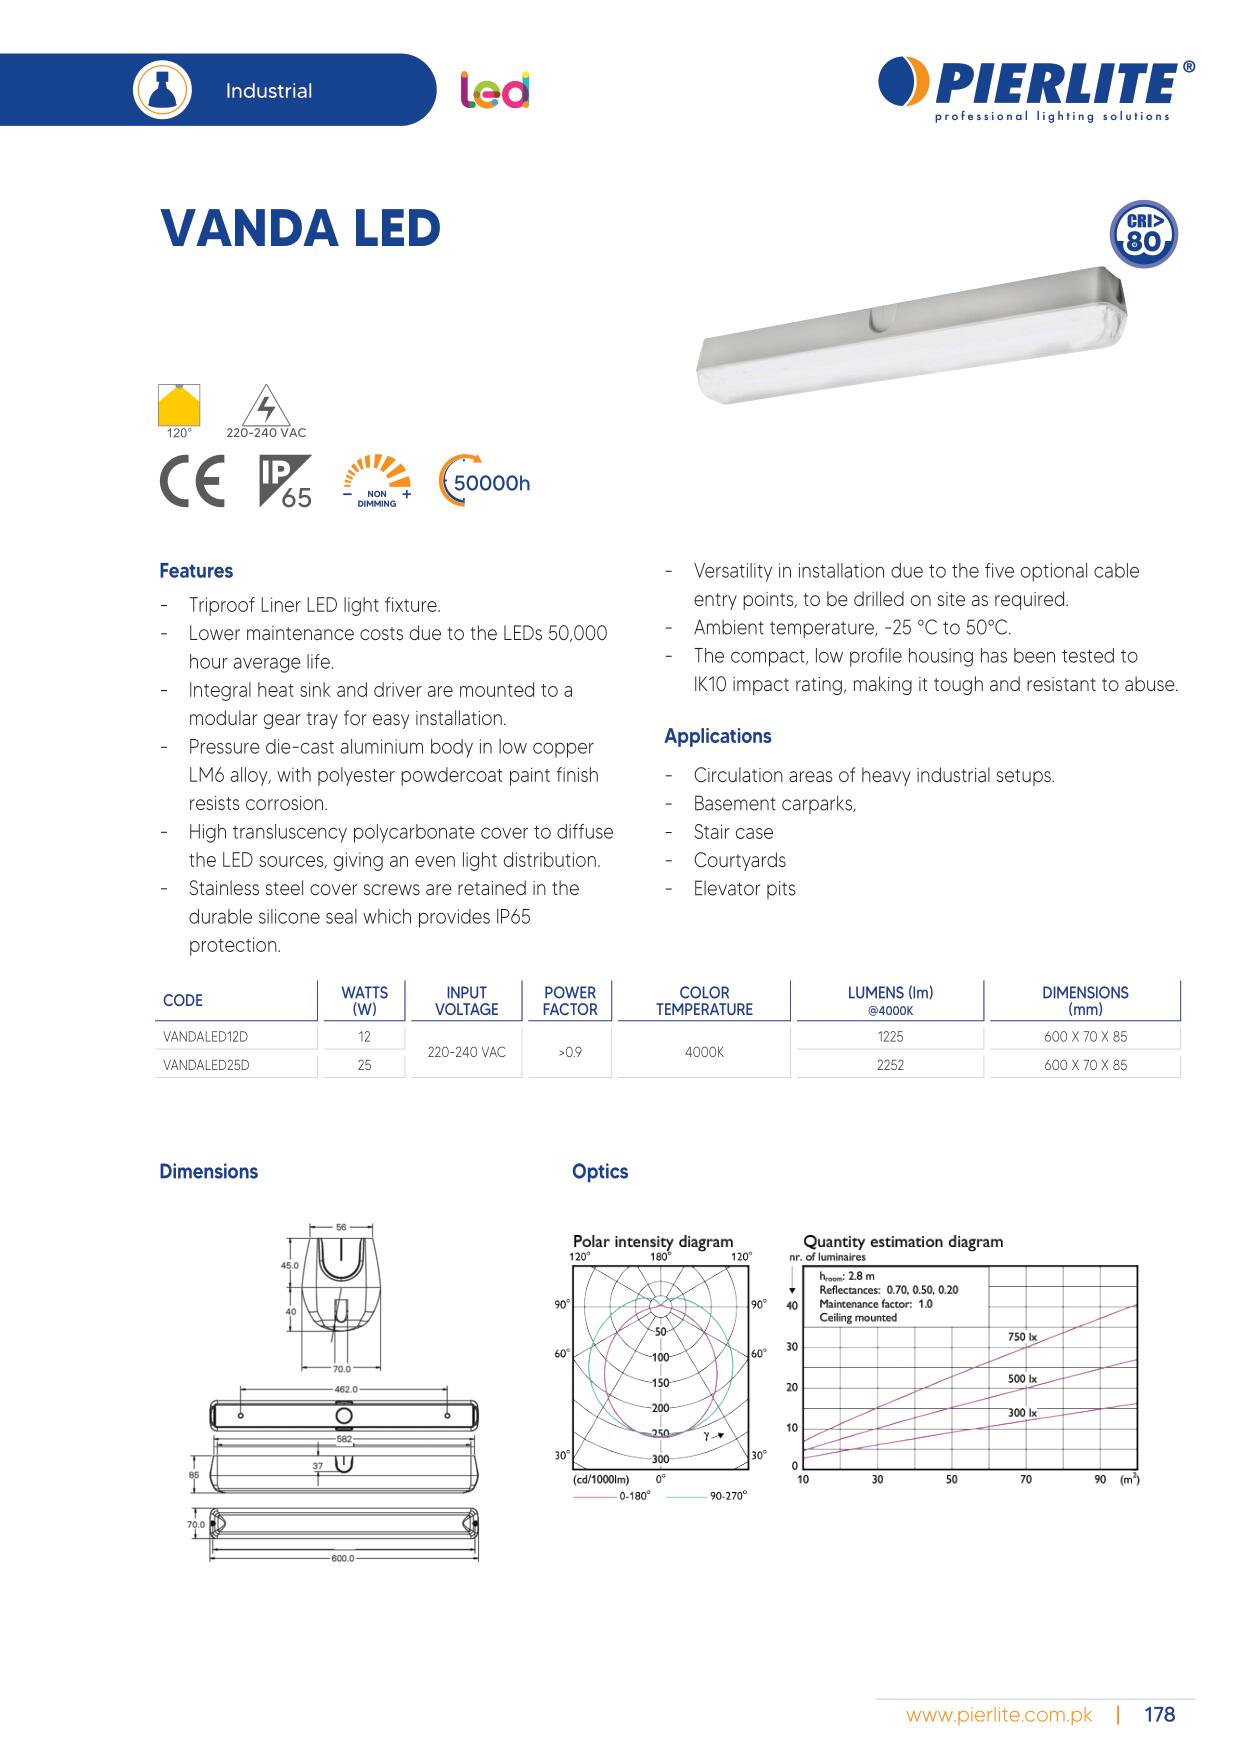 Pierlite LED Luminaire Catalog 2021-187